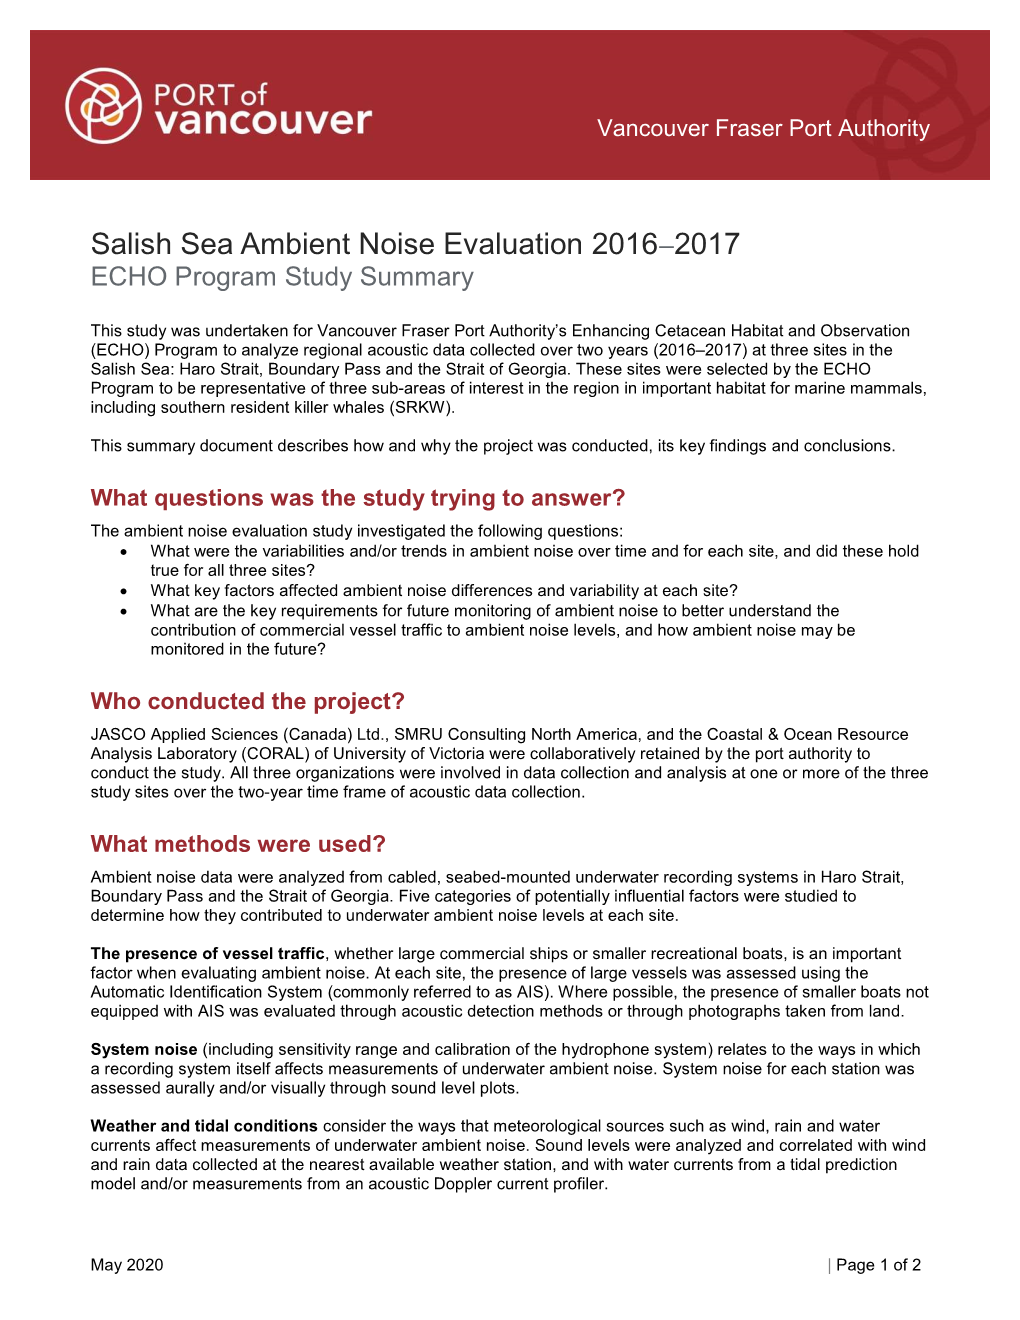 ECHO Program Salish Sea Ambient Noise Evaluation